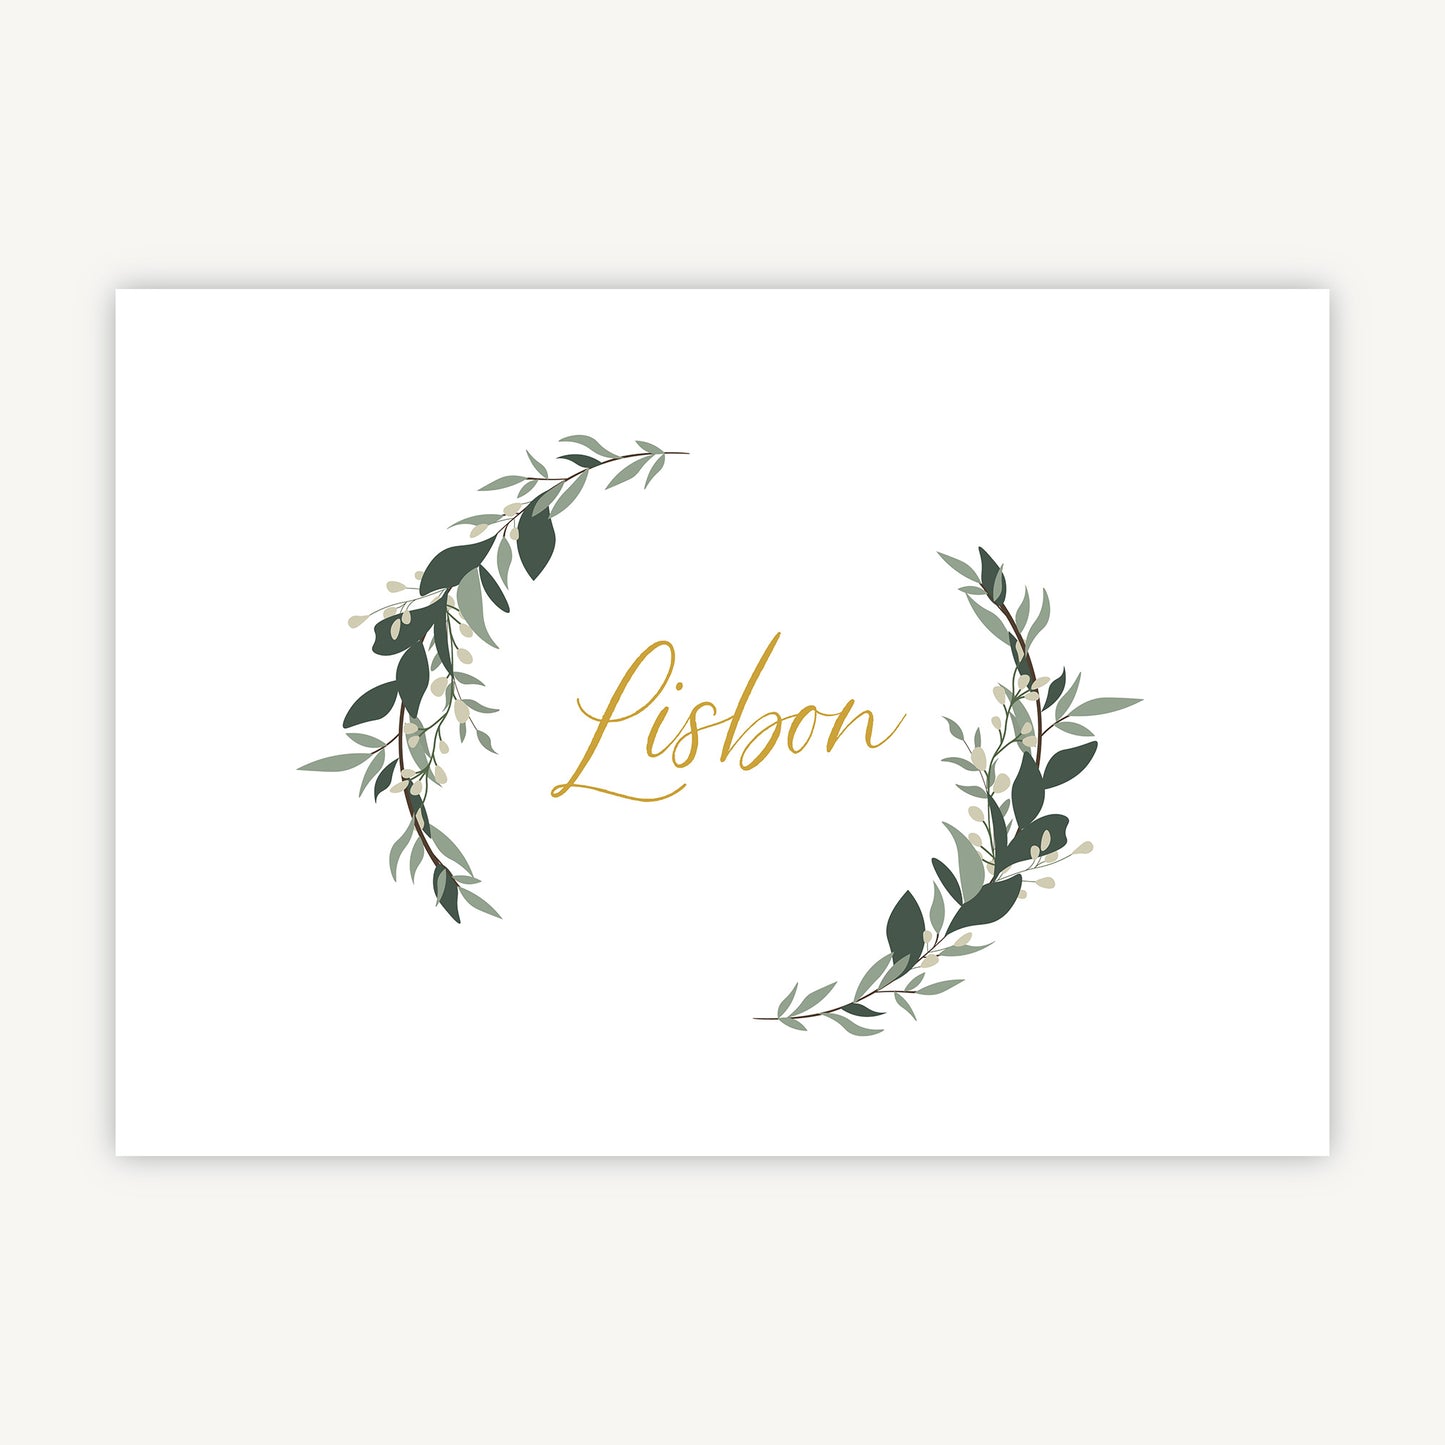 Foliage Hoop Wedding Table Name